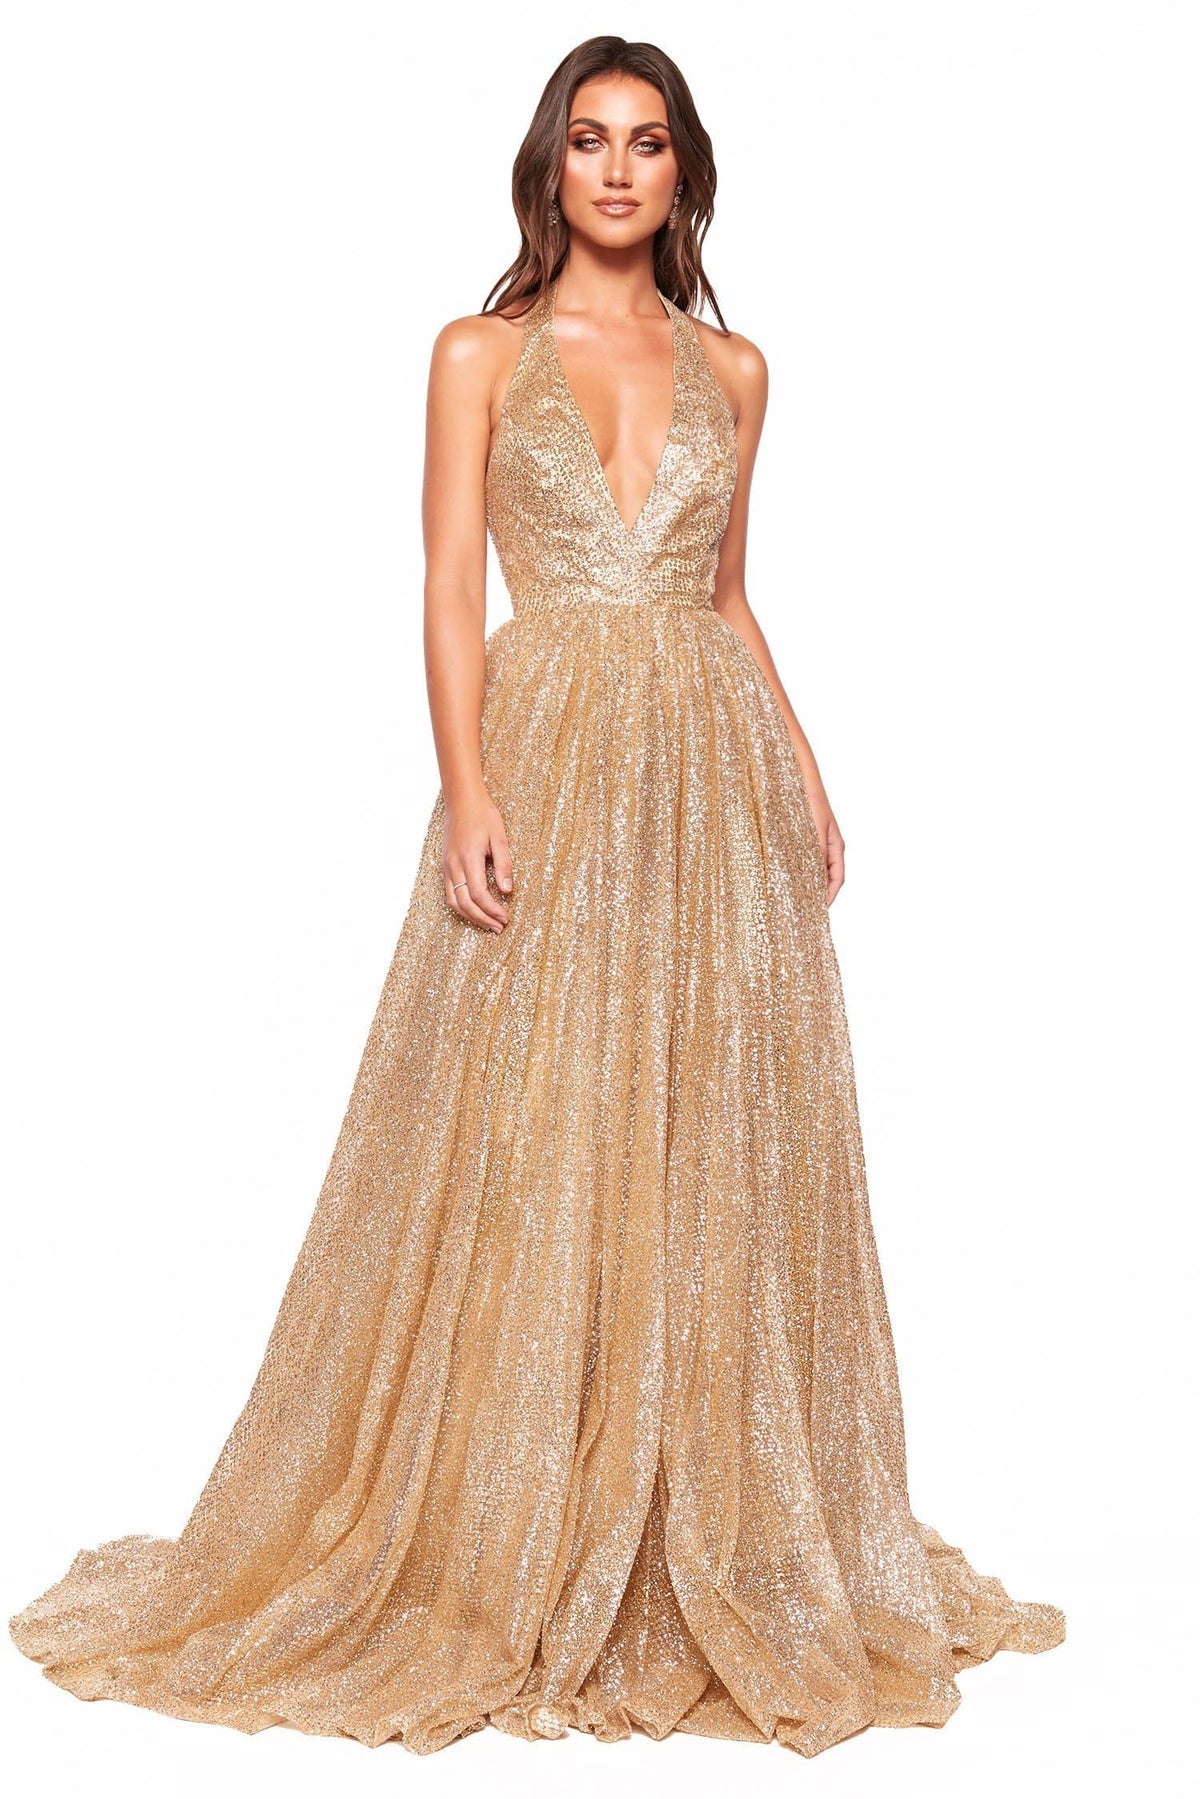 gold and glitter dress